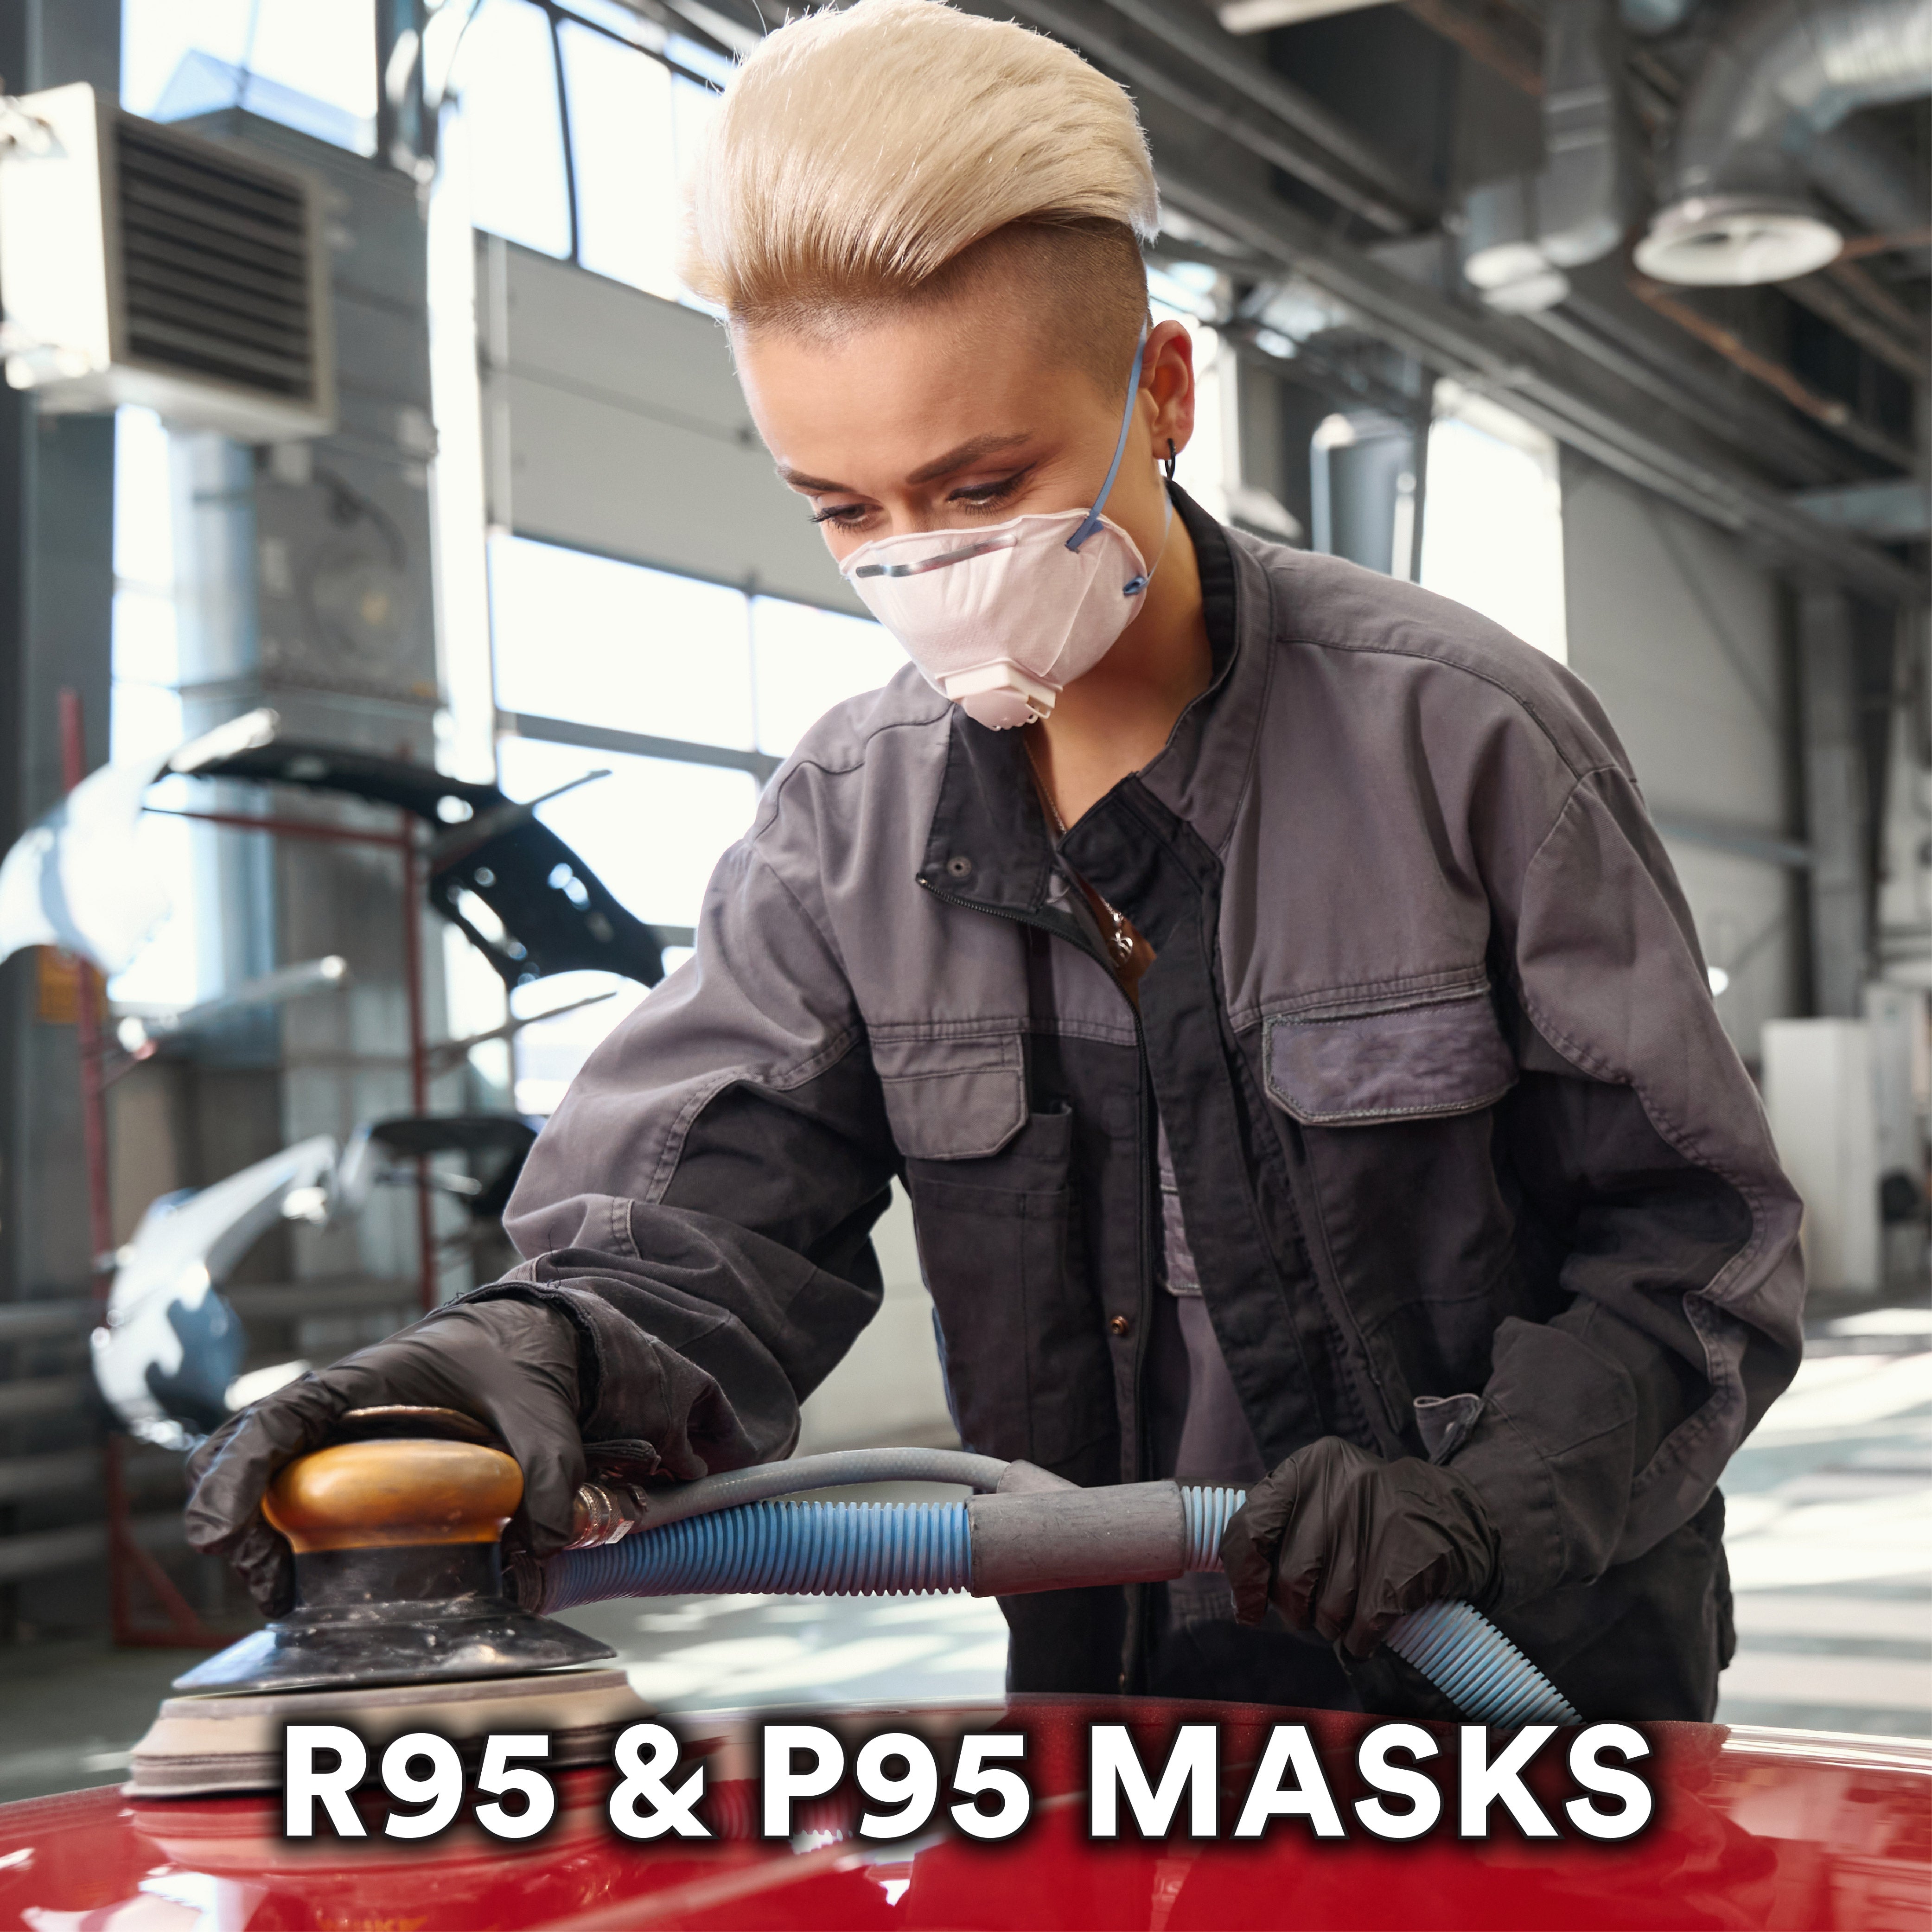 R95 & P95 Masks